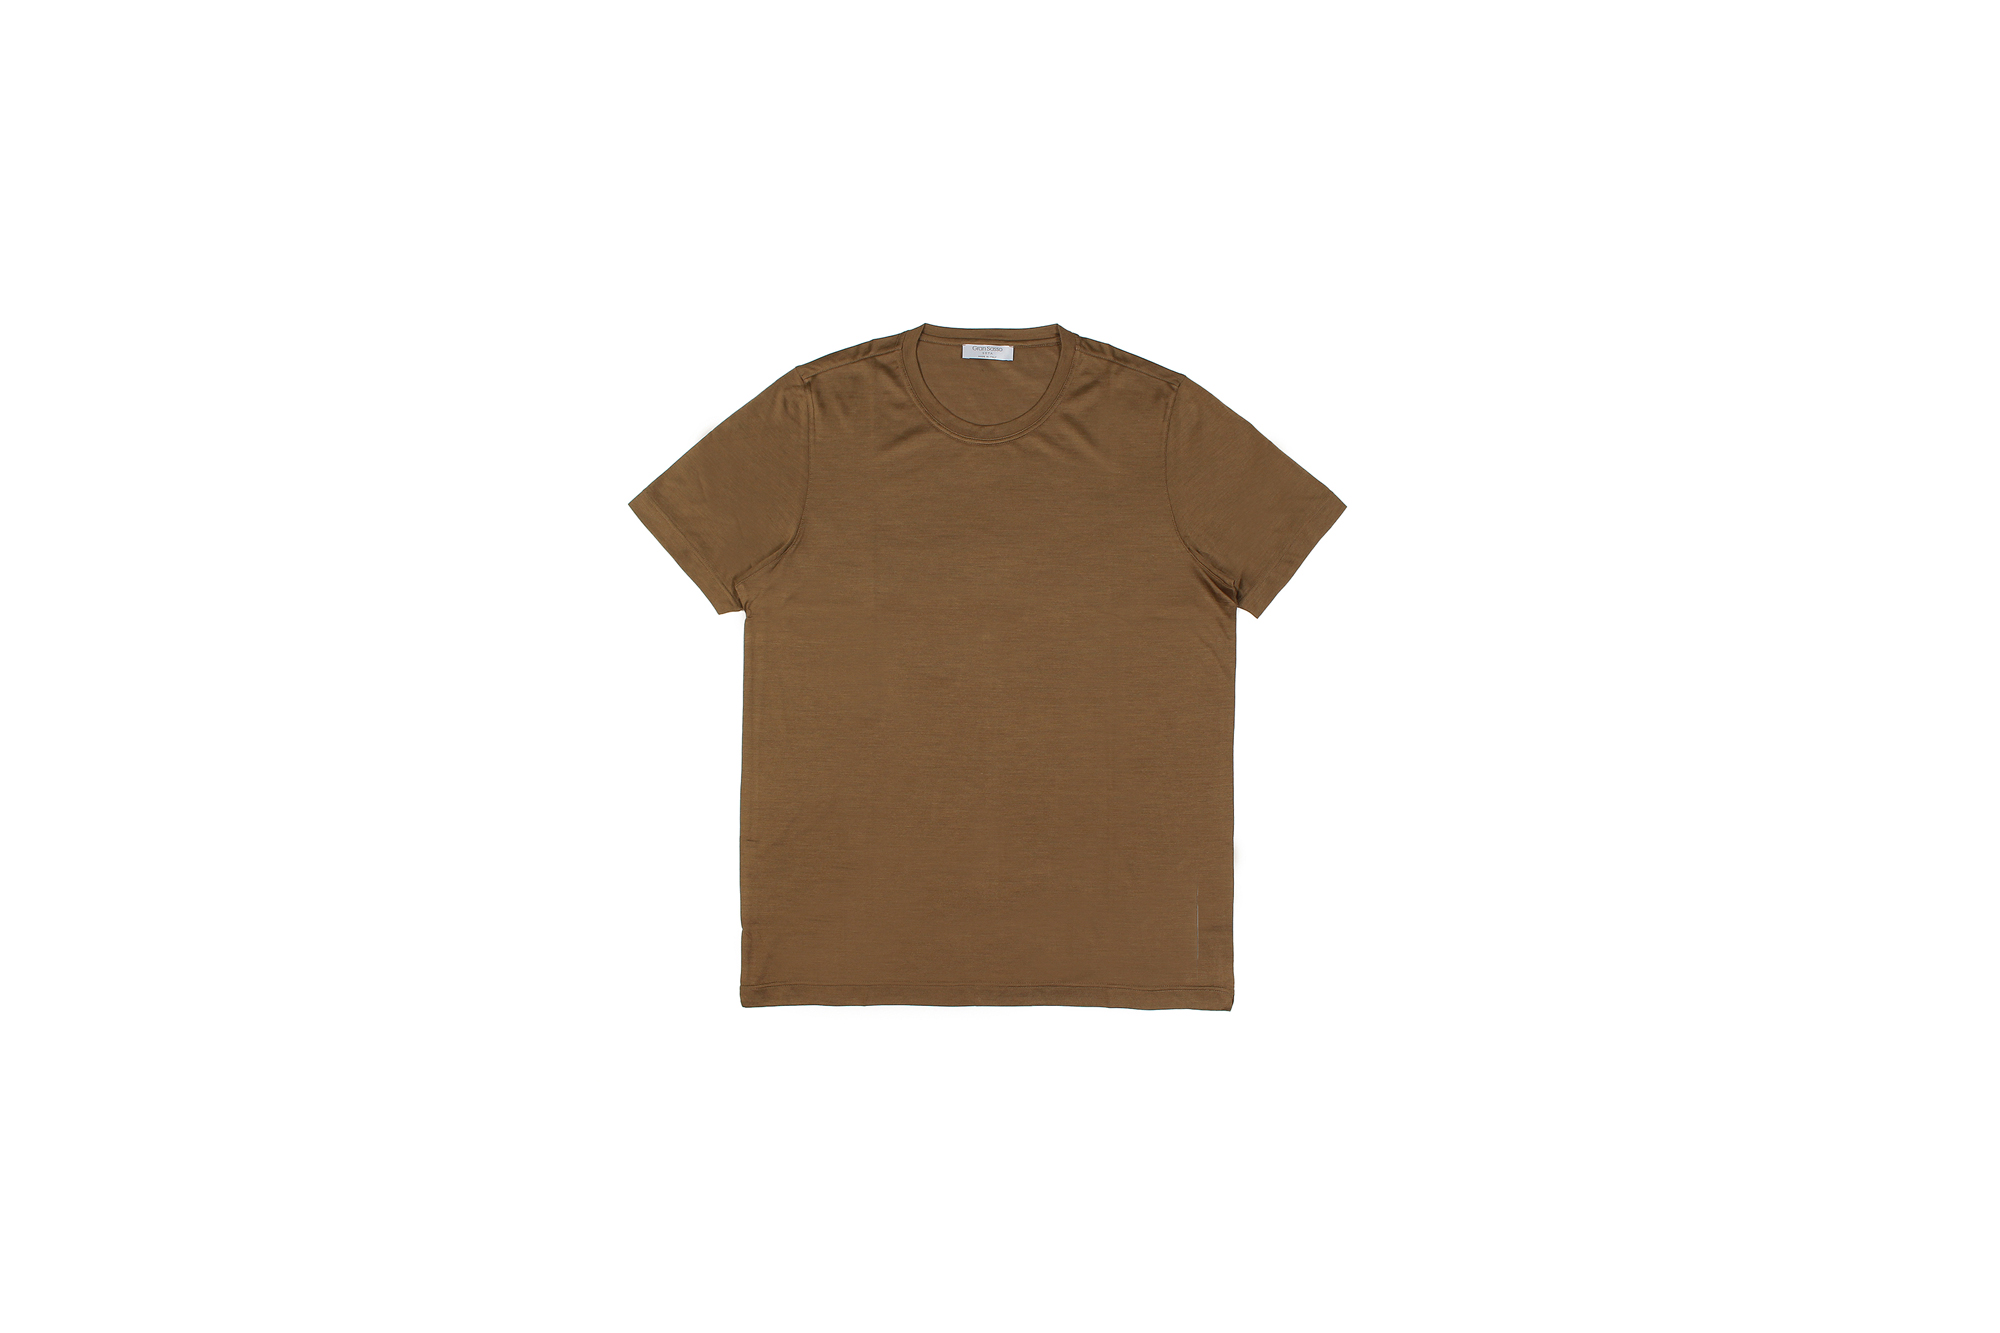 Gran Sasso (グランサッソ) Silk T-shirt (シルク Tシャツ) SETA (シルク 100%) ショートスリーブ シルク Tシャツ GOLD (ゴールド・160) made in italy (イタリア製) 2020 春夏新作 愛知 名古屋 altoediritto アルトエデリット